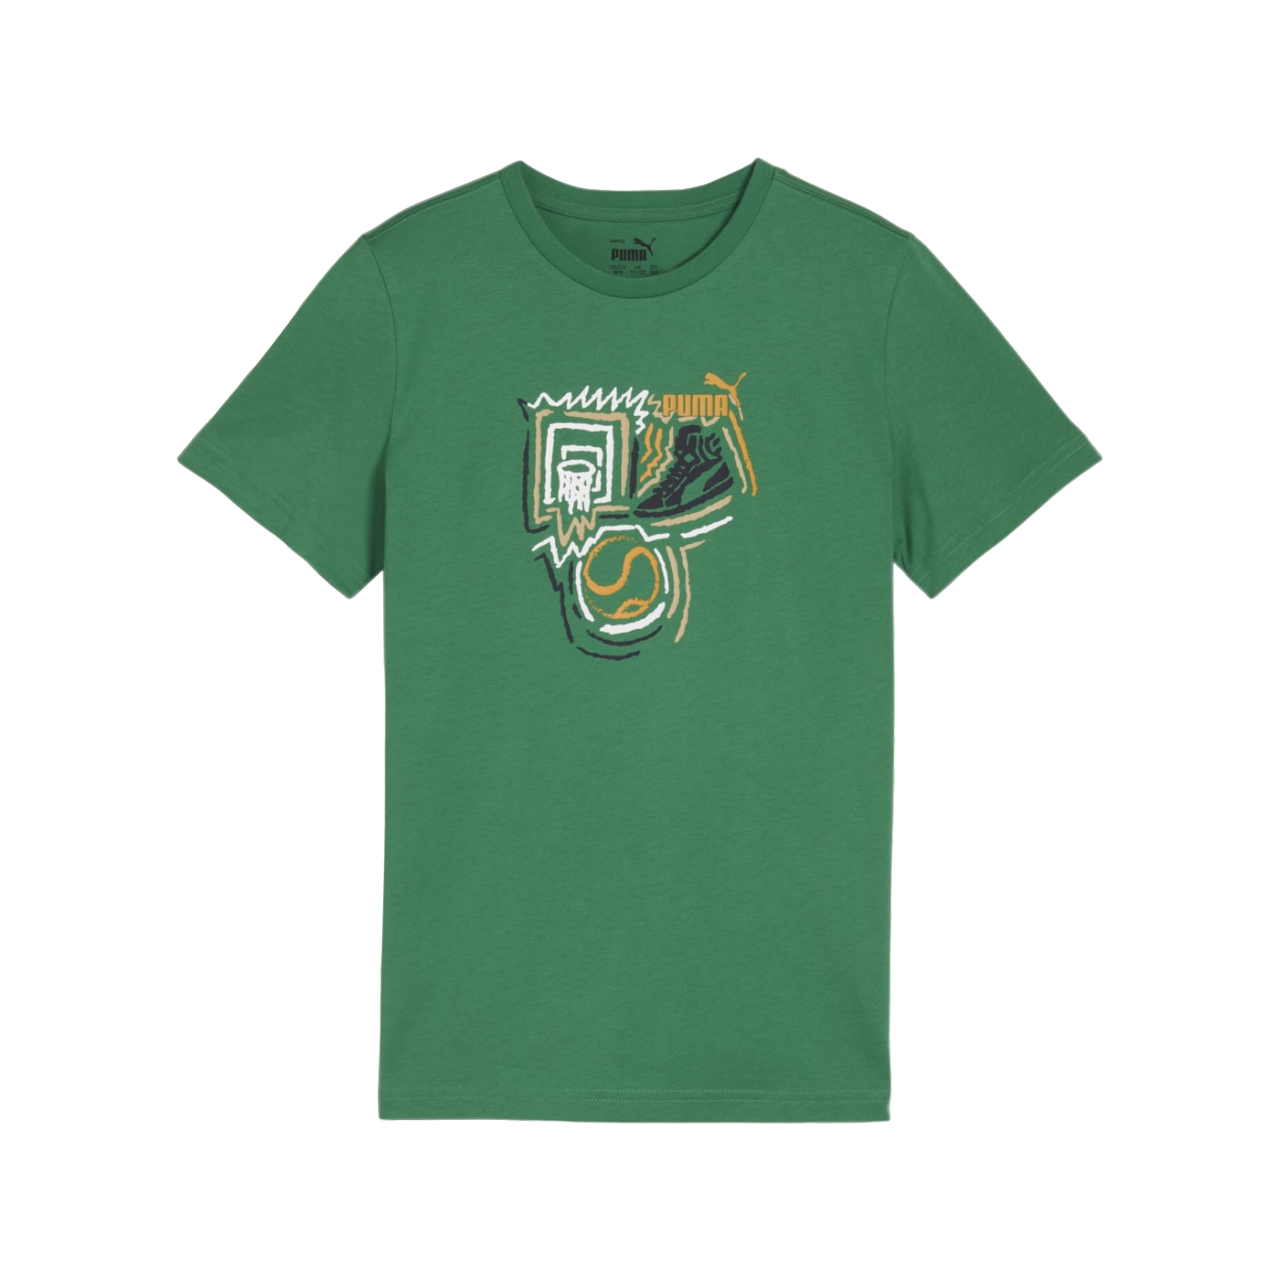 Puma short sleeve t-shirt for children graphics 680299 86 green